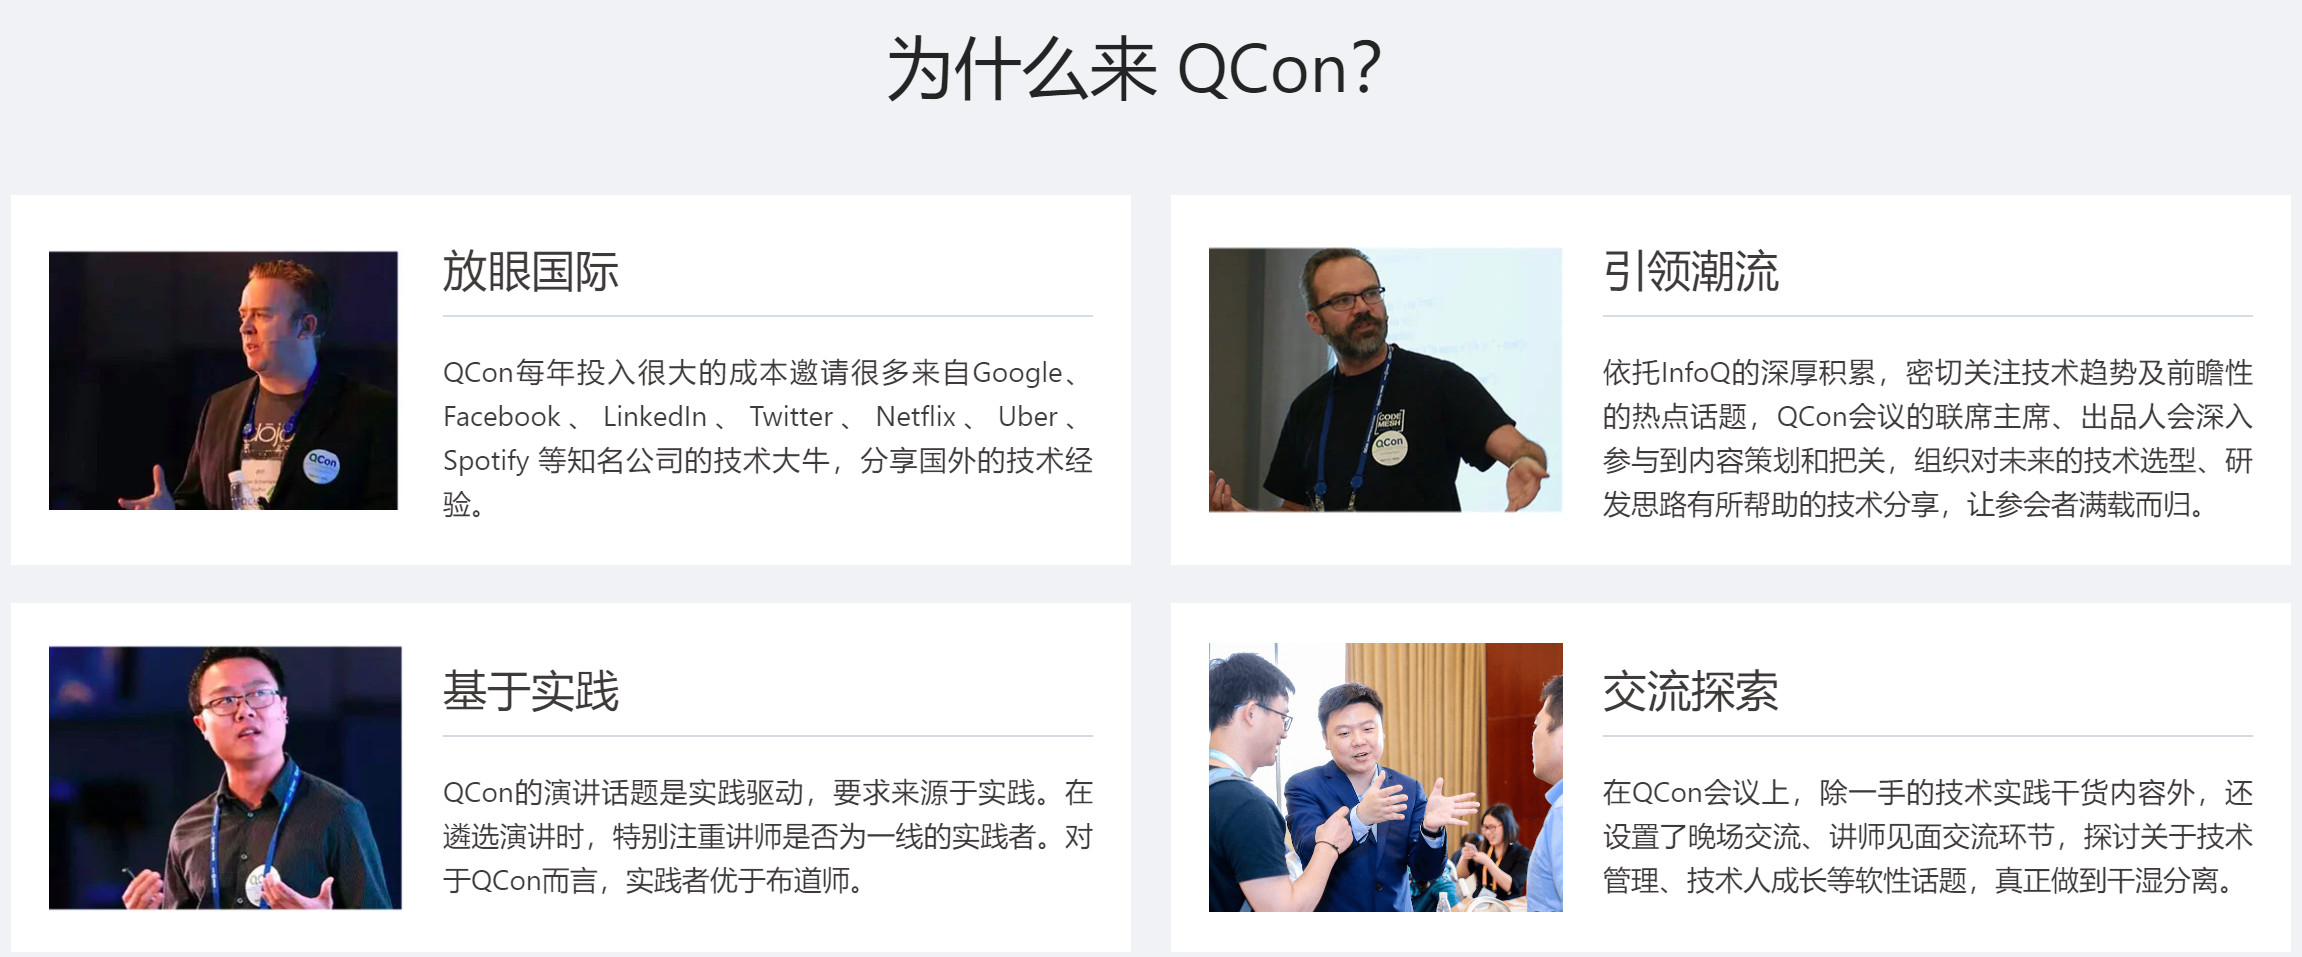 QCon上海2023|全球軟件開發大會